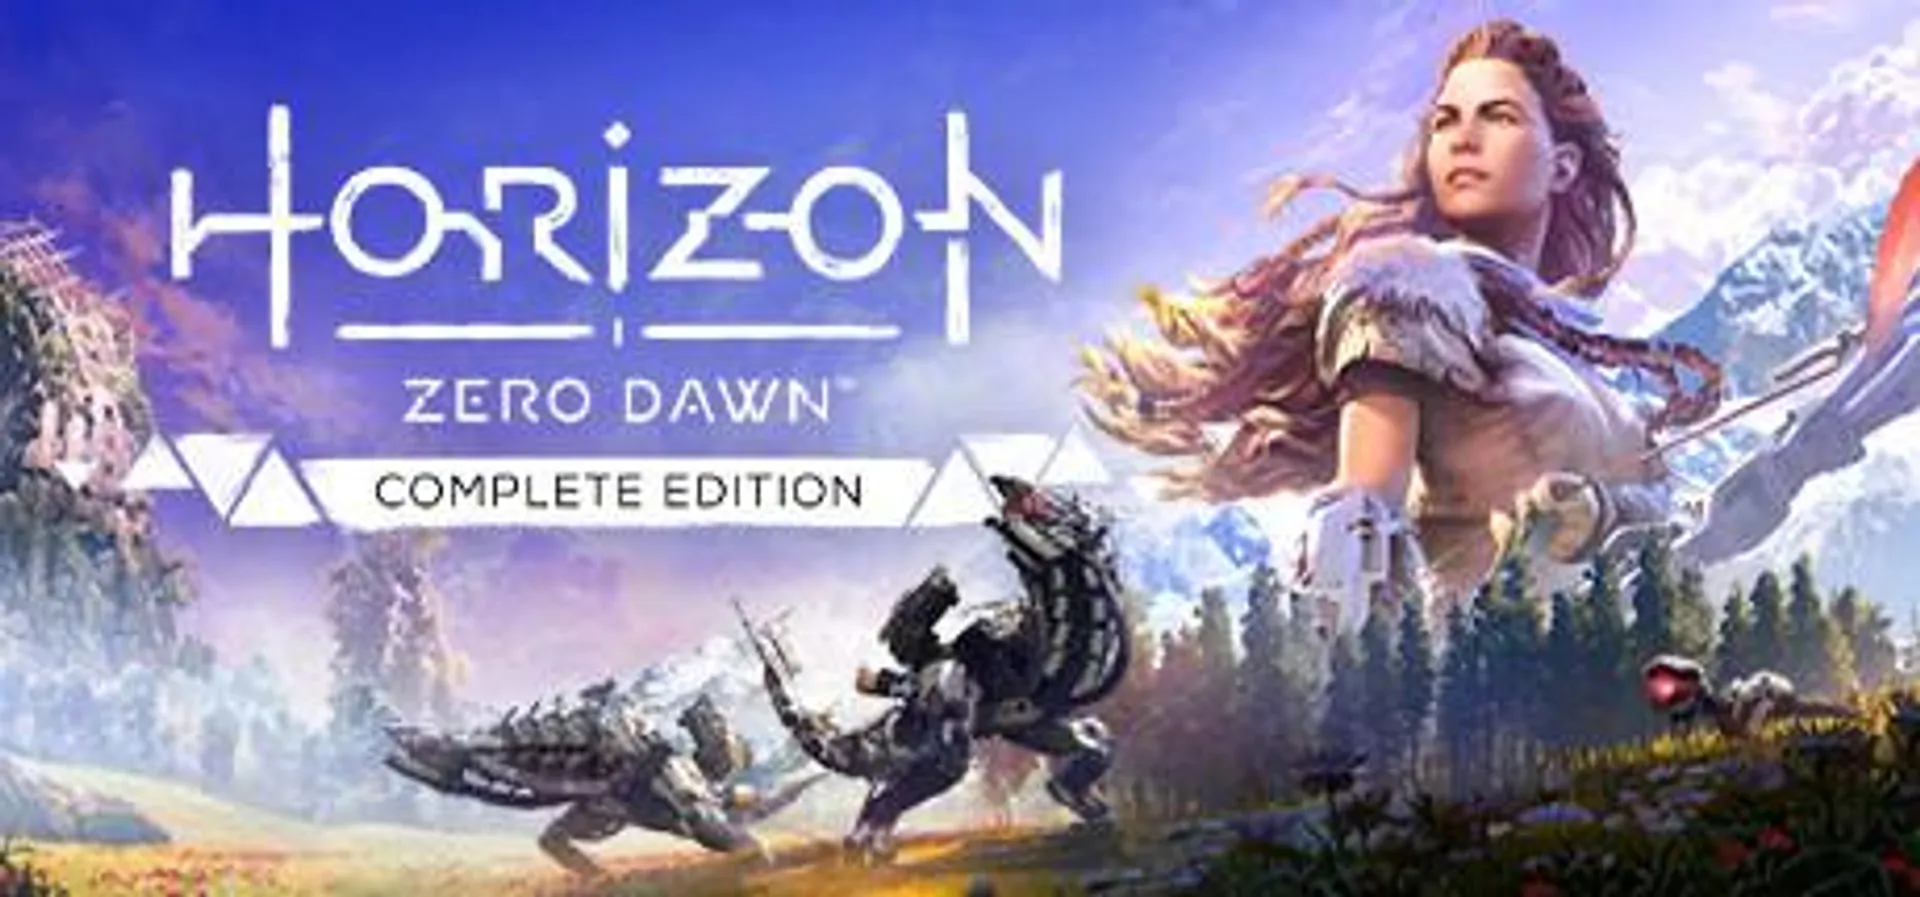 Save 60% on Horizon Zero Dawn™ Complete Edition on Steam